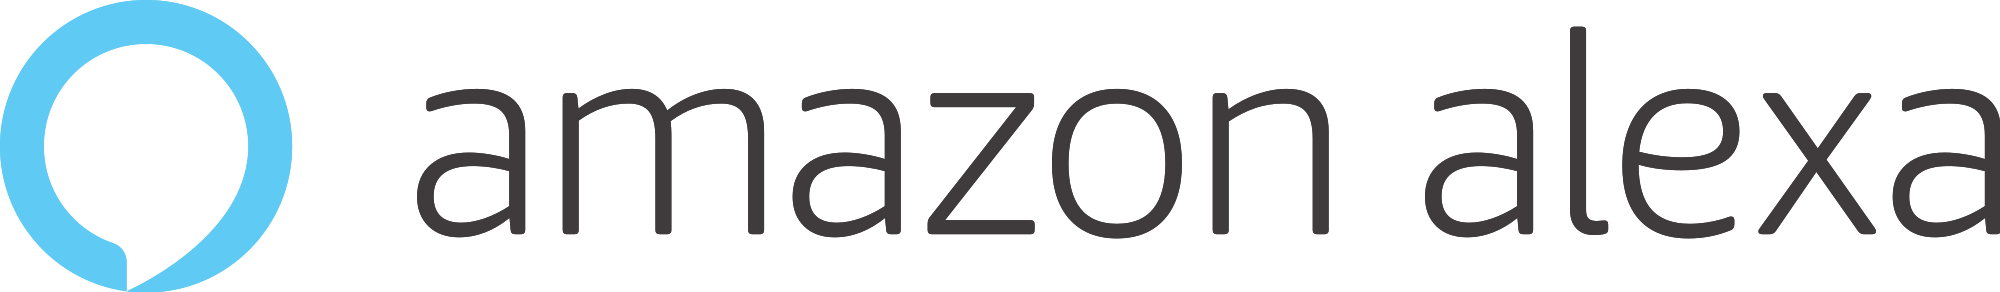 Amazon Alexa Logo - Amazon Alexa logo.svg